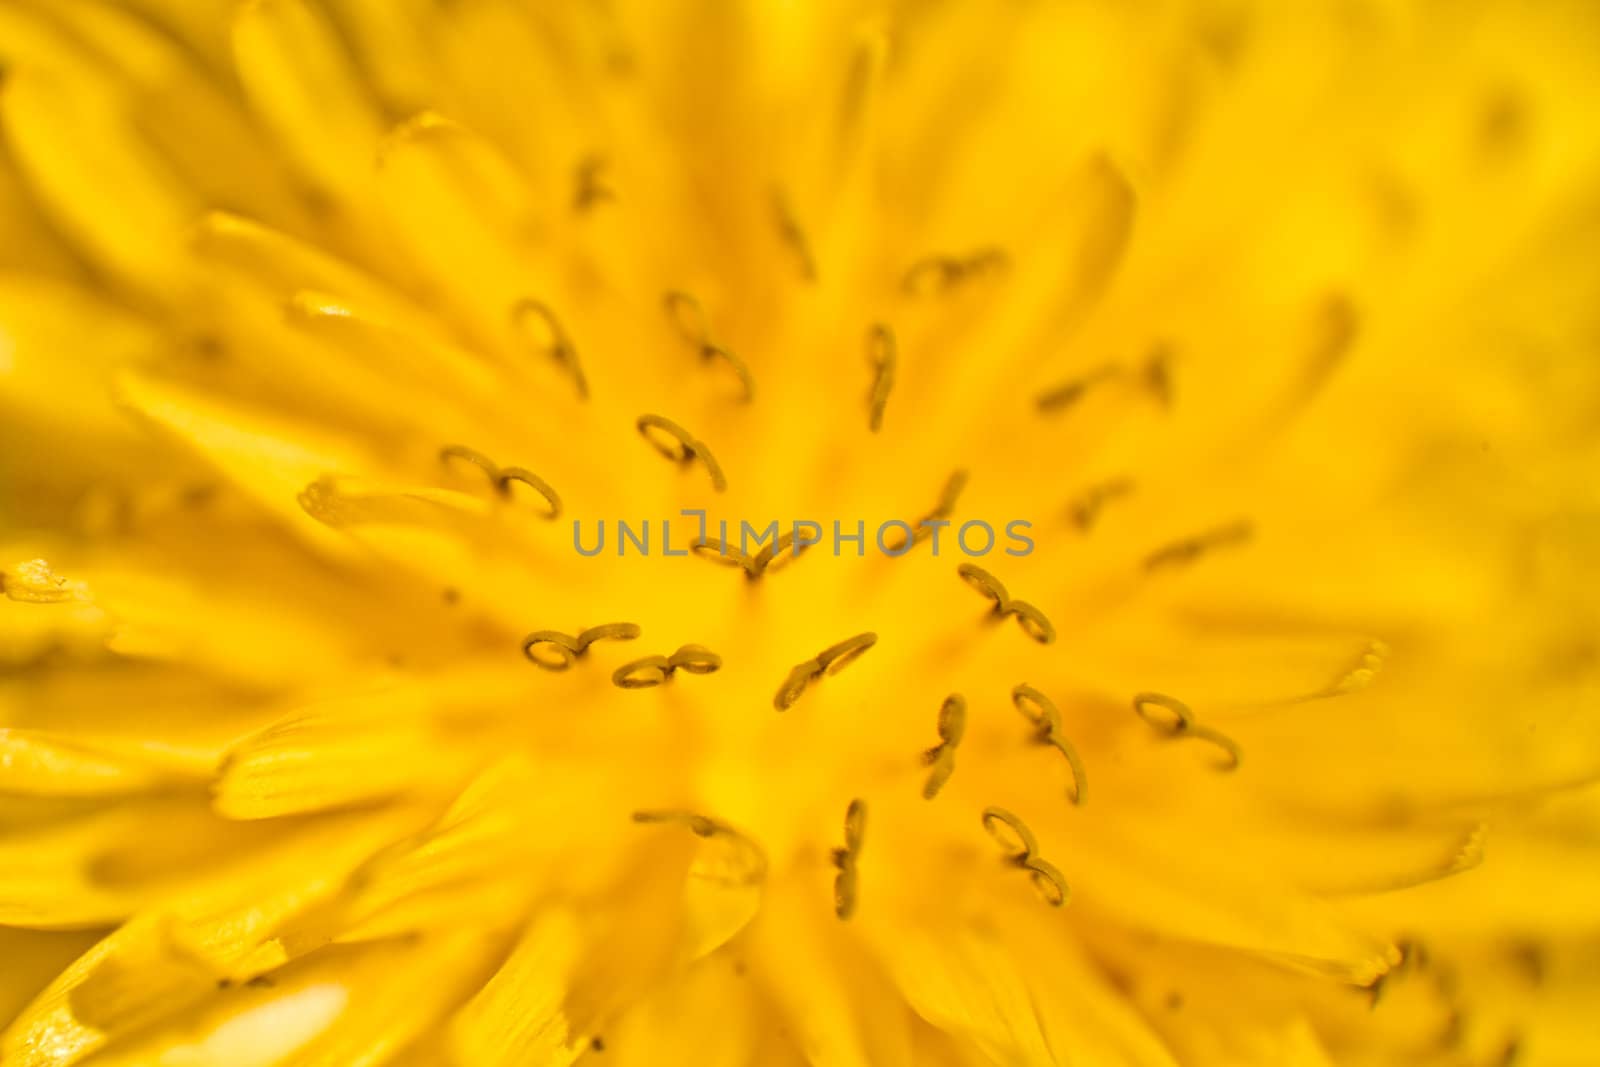 Yellow Dandelion details taken with macro lens